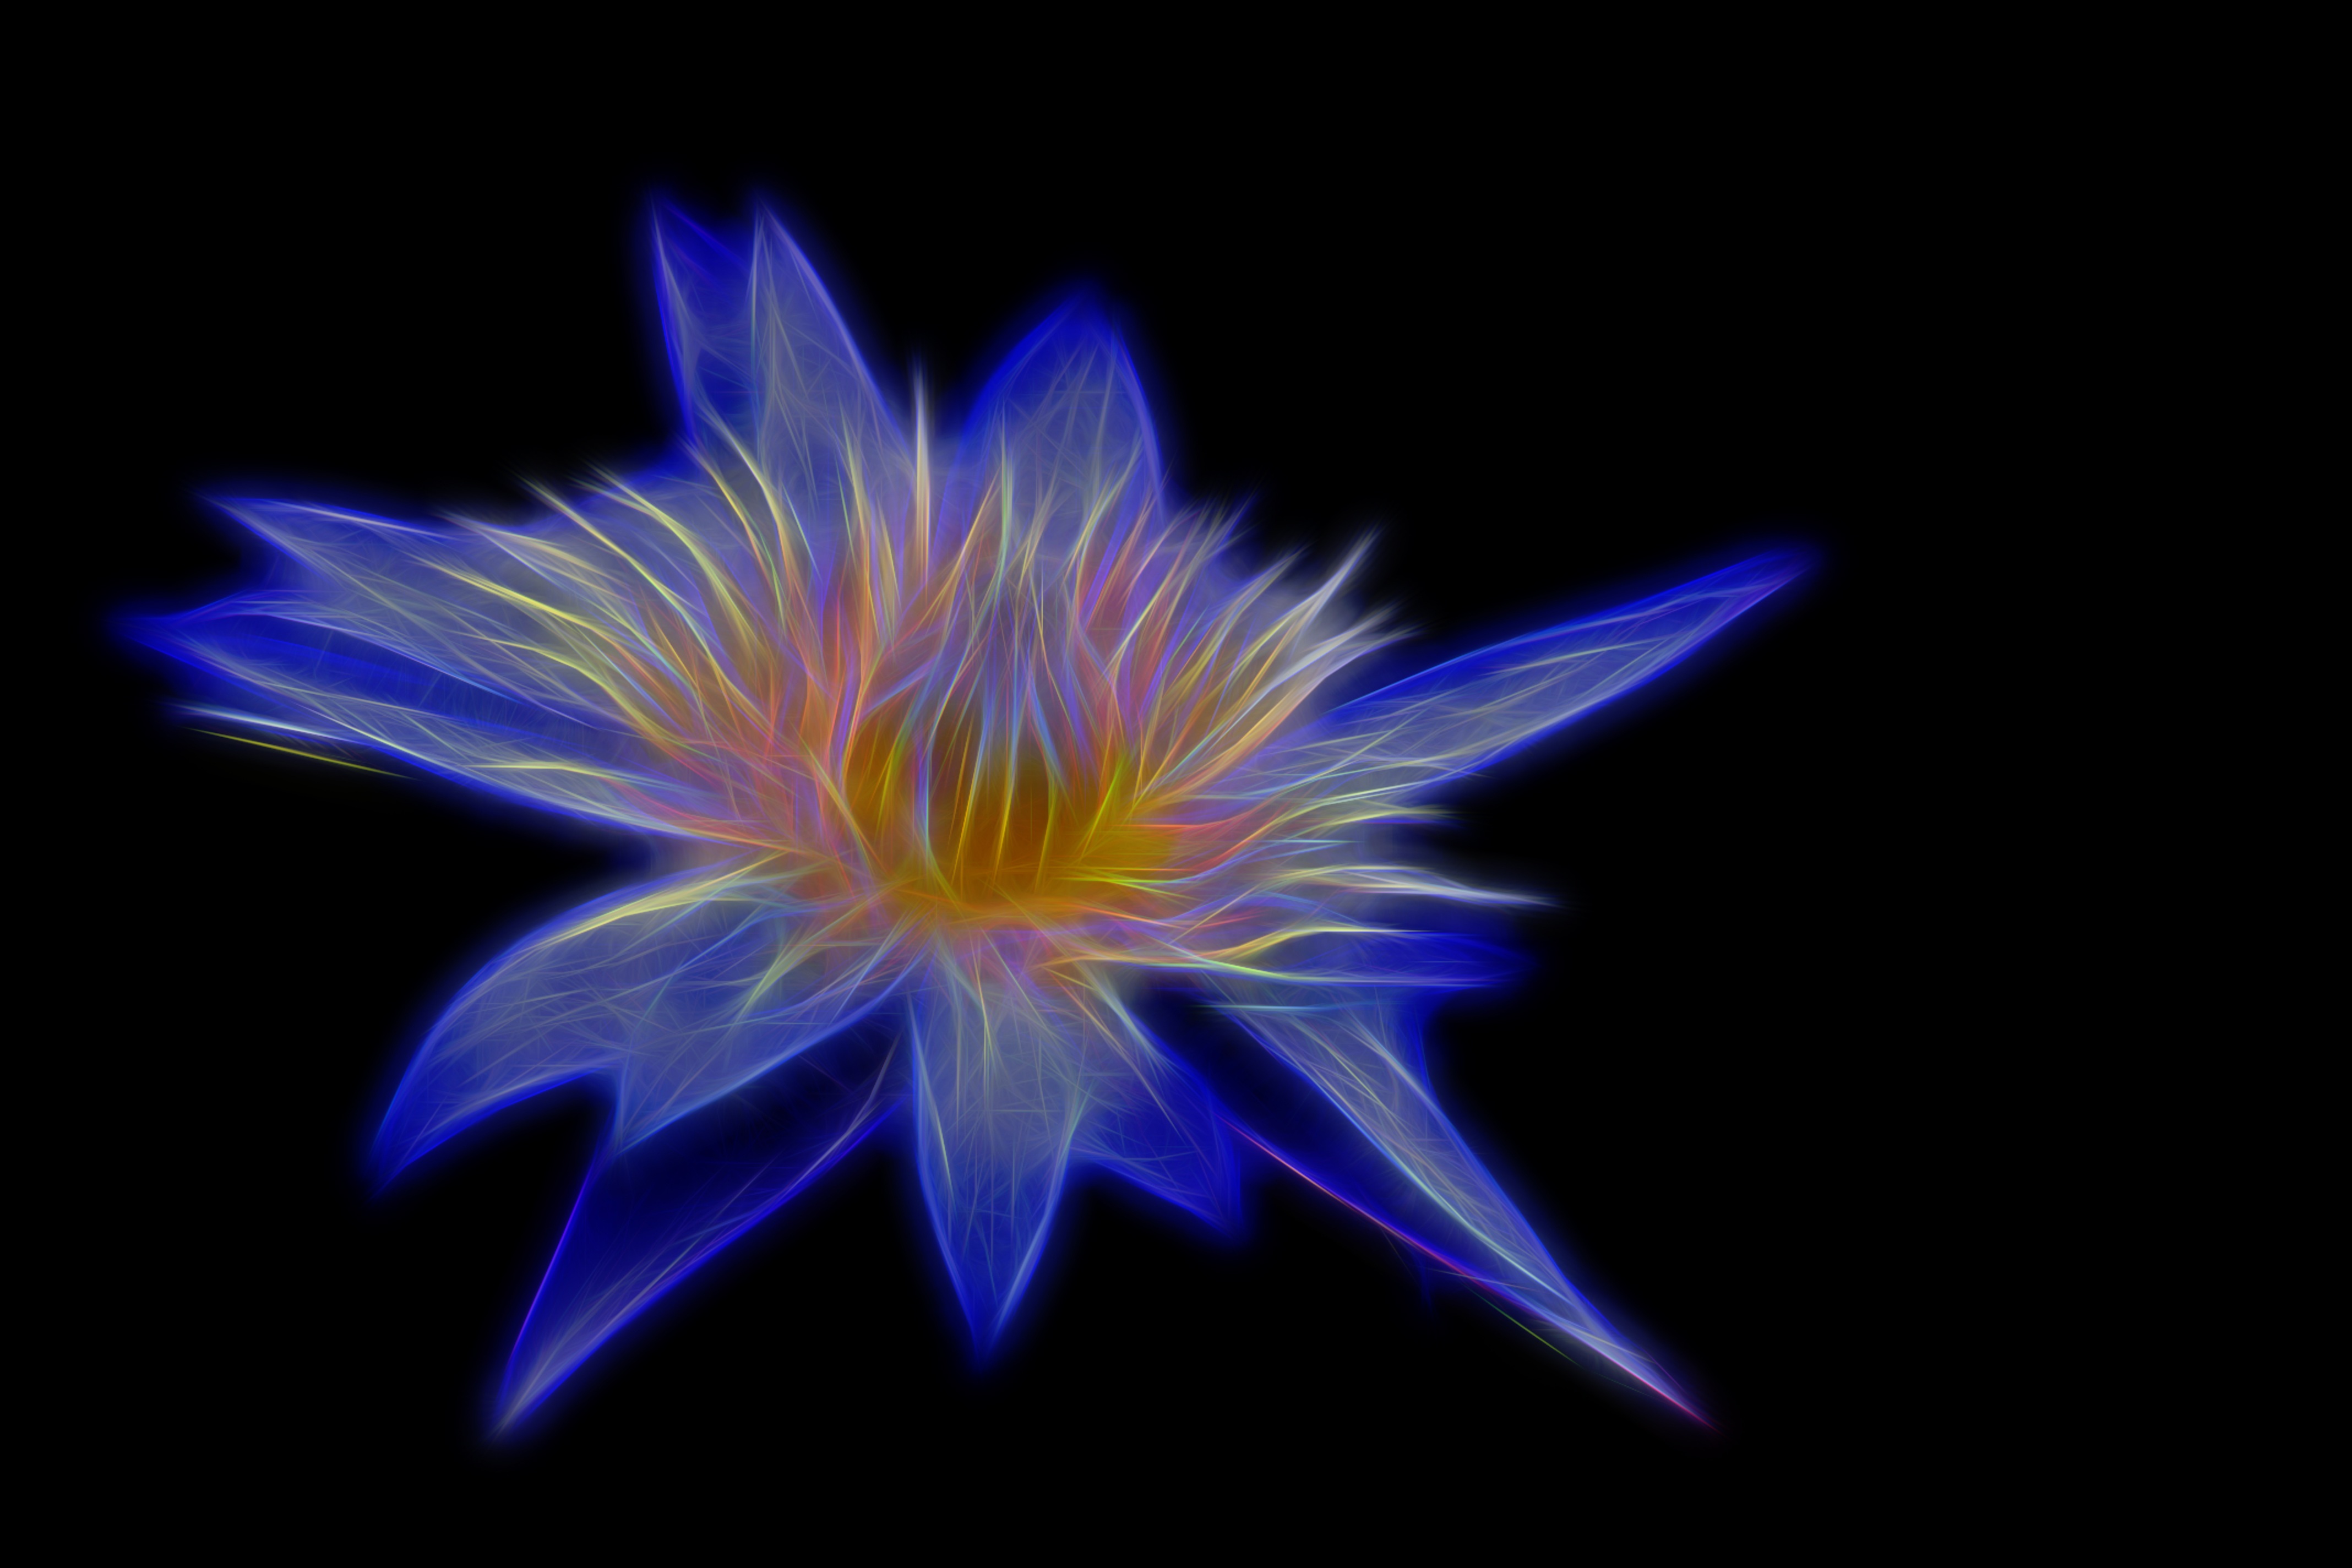 Fractal Flower 4k Ultra HD Wallpaper | Background Image | 4272x2848 | ID:789776 - Wallpaper Abyss